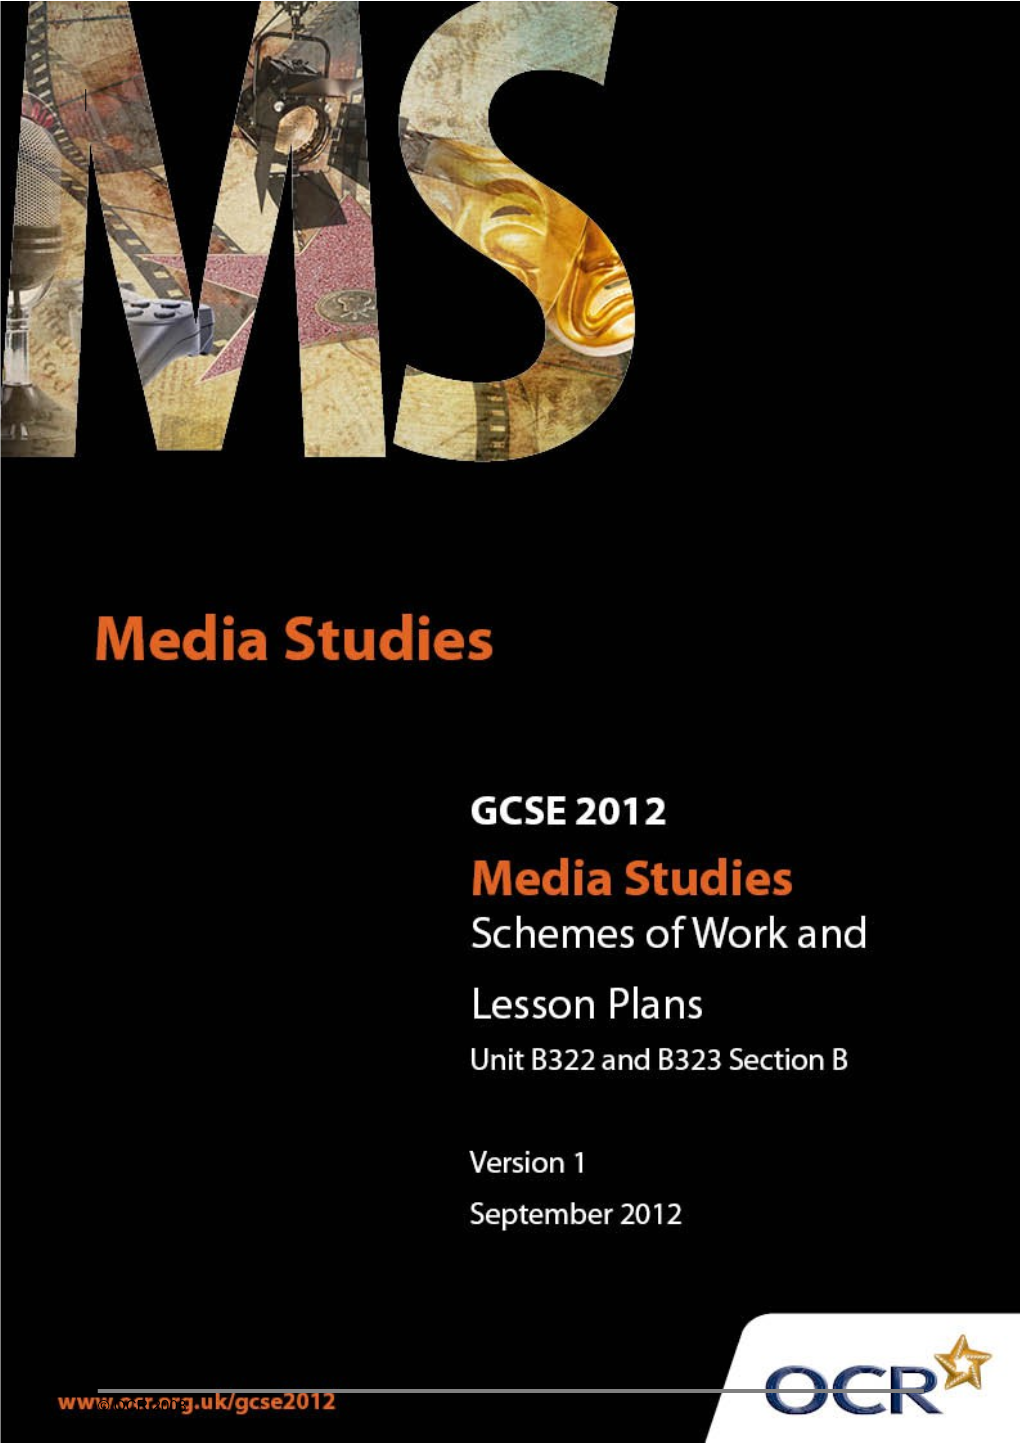 OCR GCSE Media Studies Units B322 & B323 Section B: Television Comedy